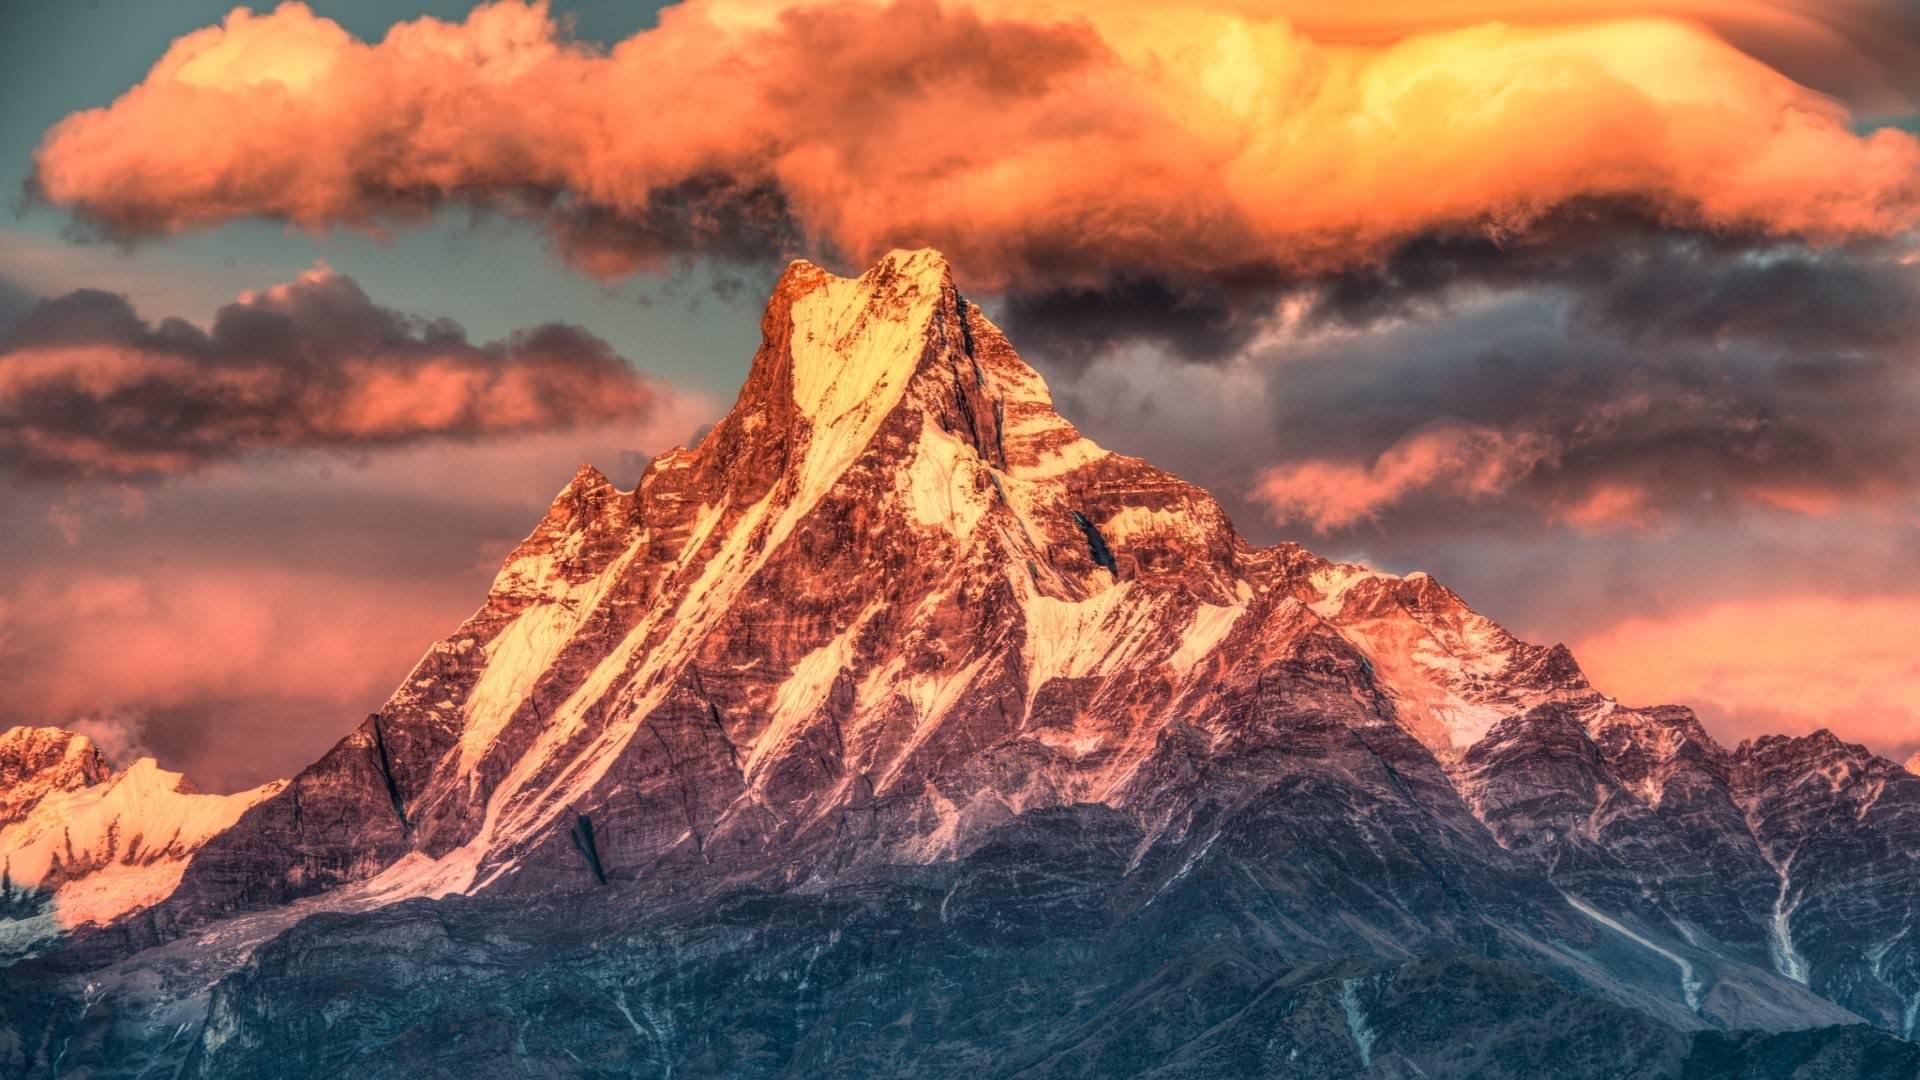 Himalayas wallpaper 1920x1080 Full HD (1080p) desktop background